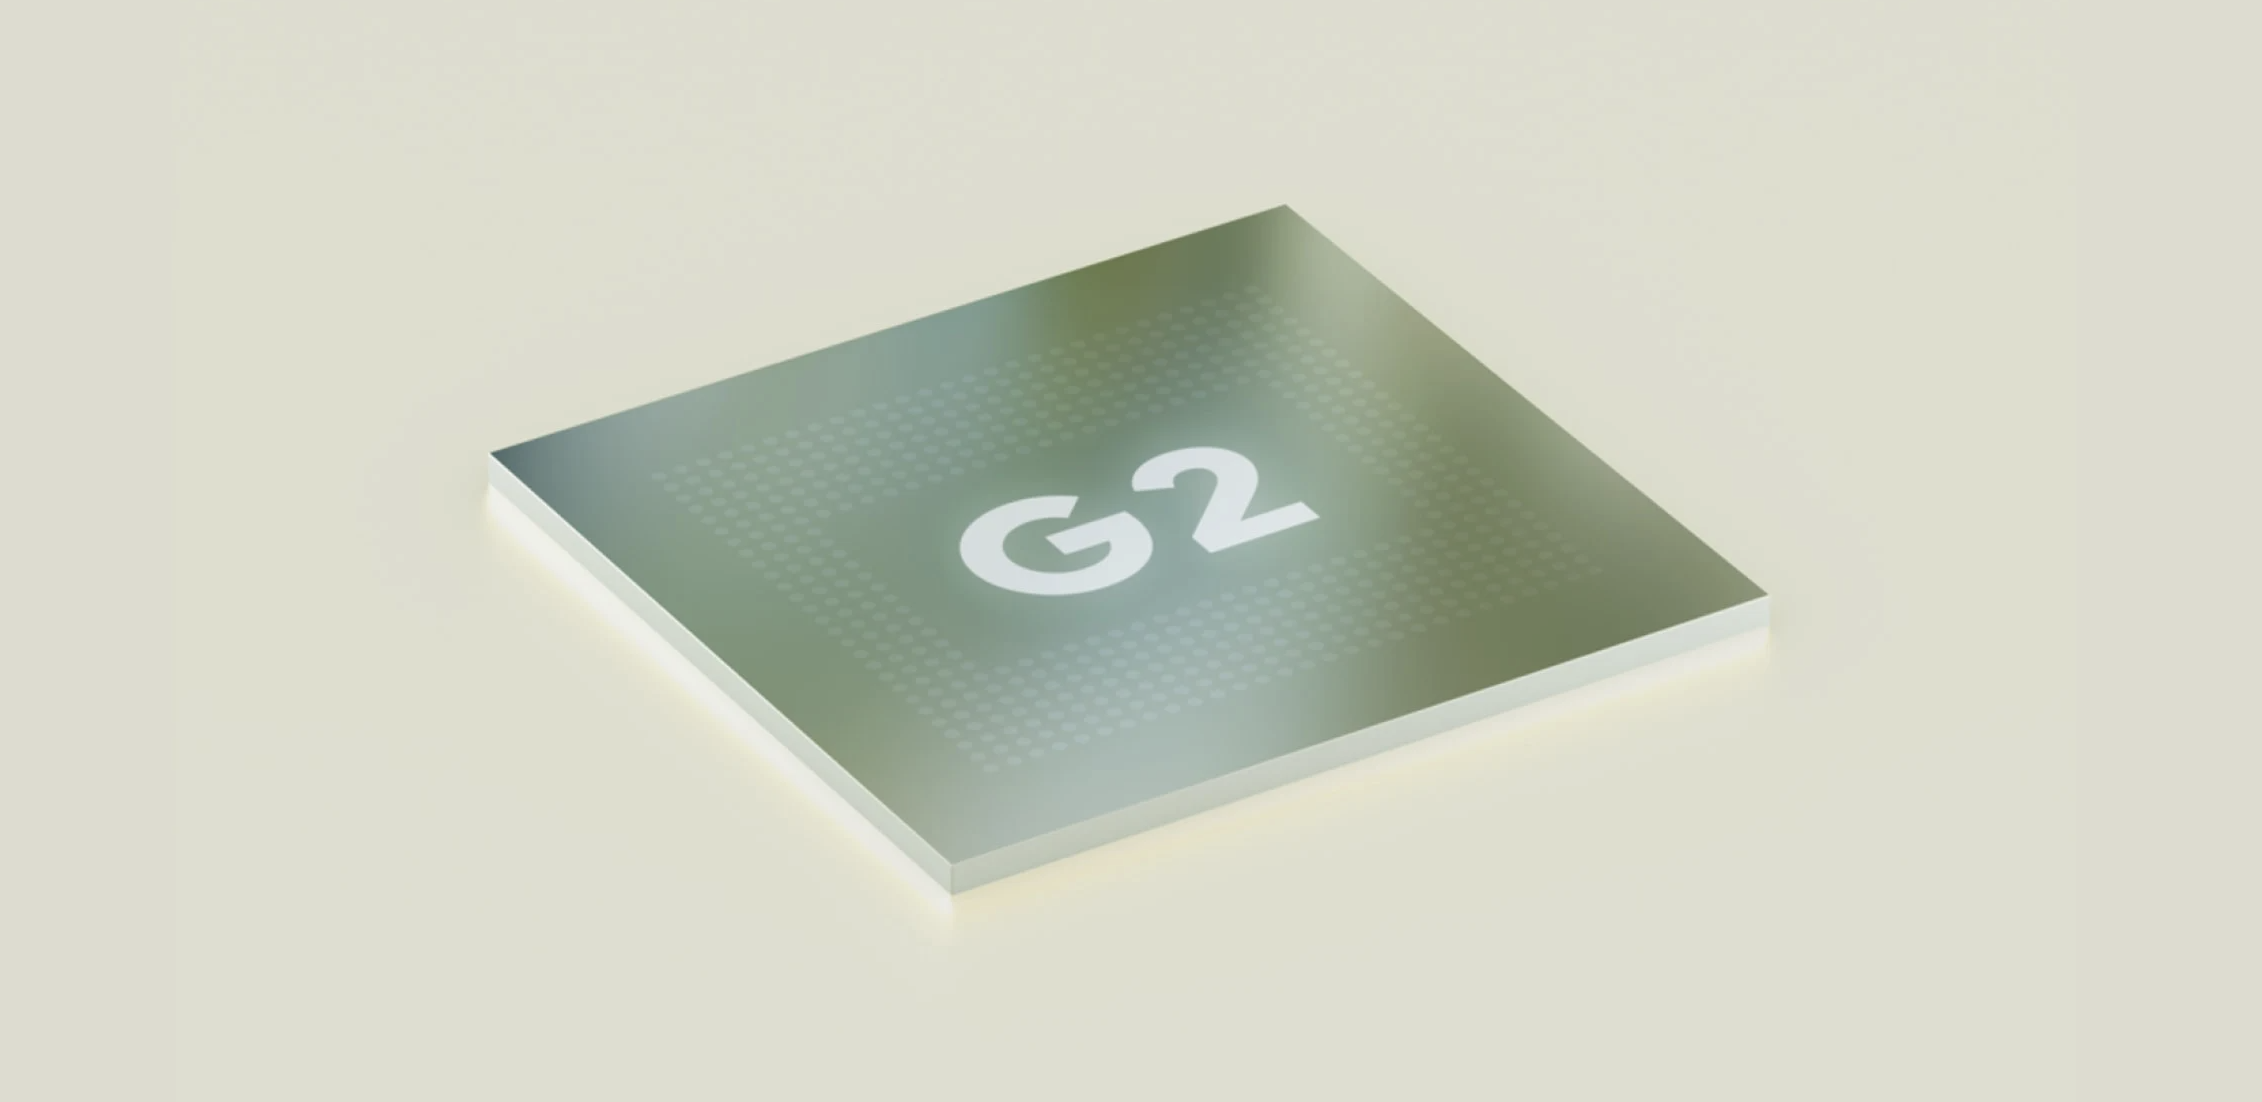 Google Tensor G2 chip